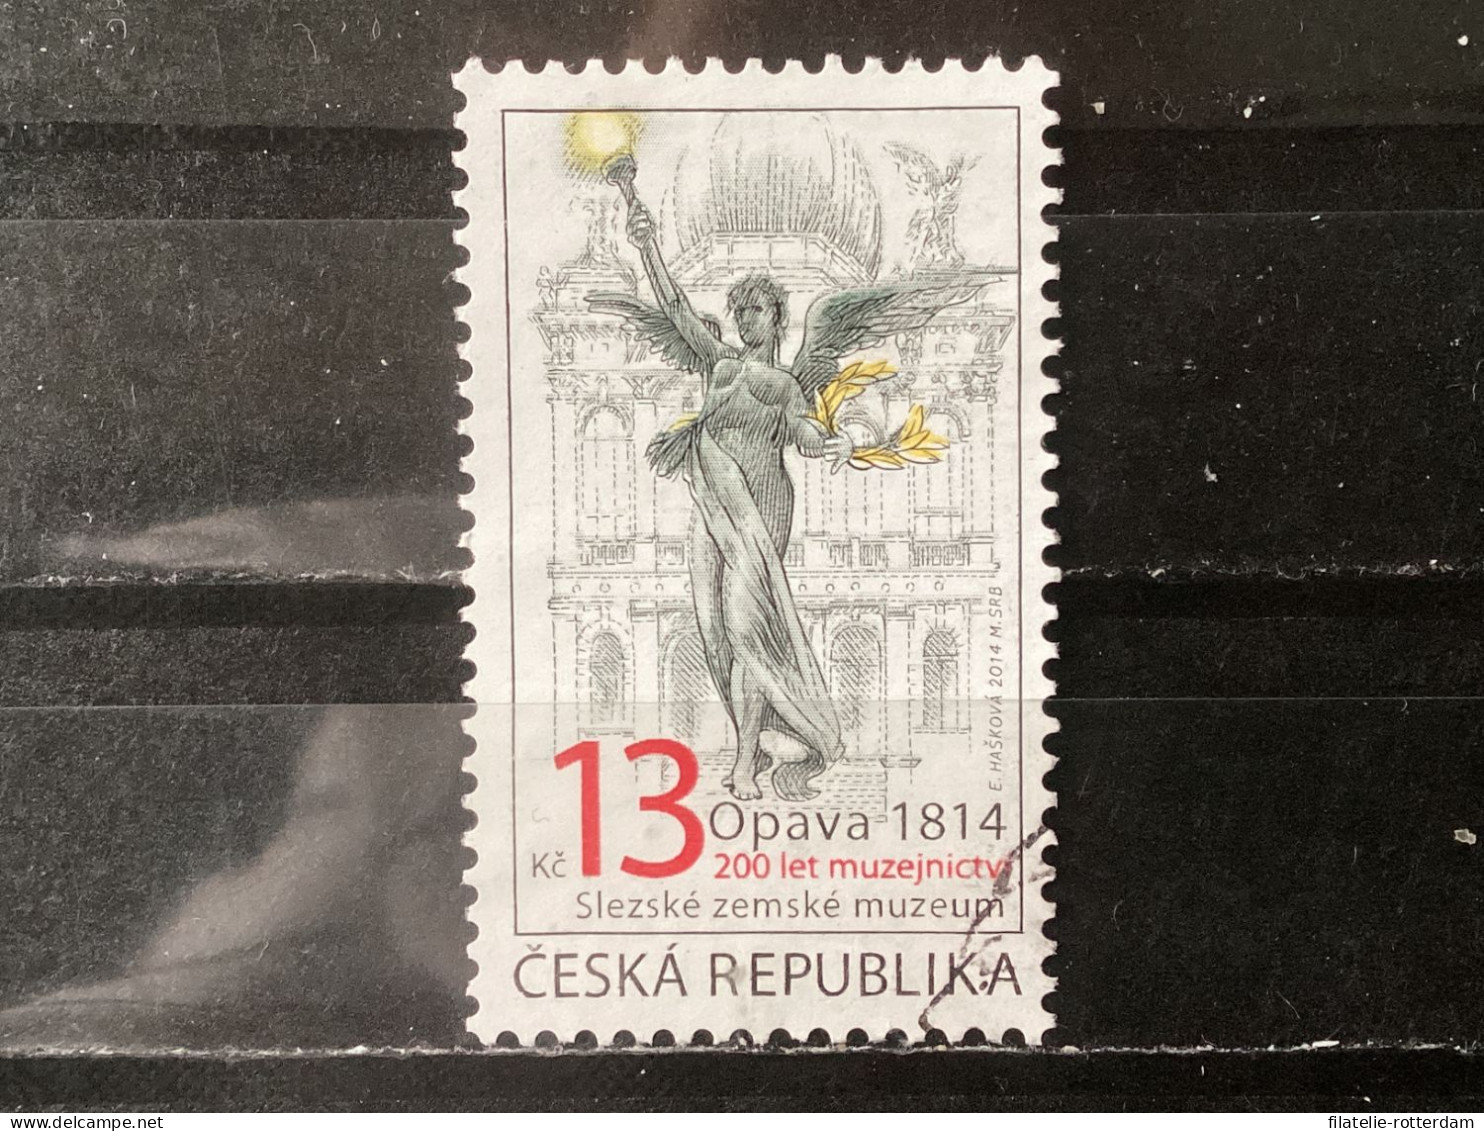 Czech Republic / Tsjechië - Silesian Land Museum (13) 2014 - Used Stamps